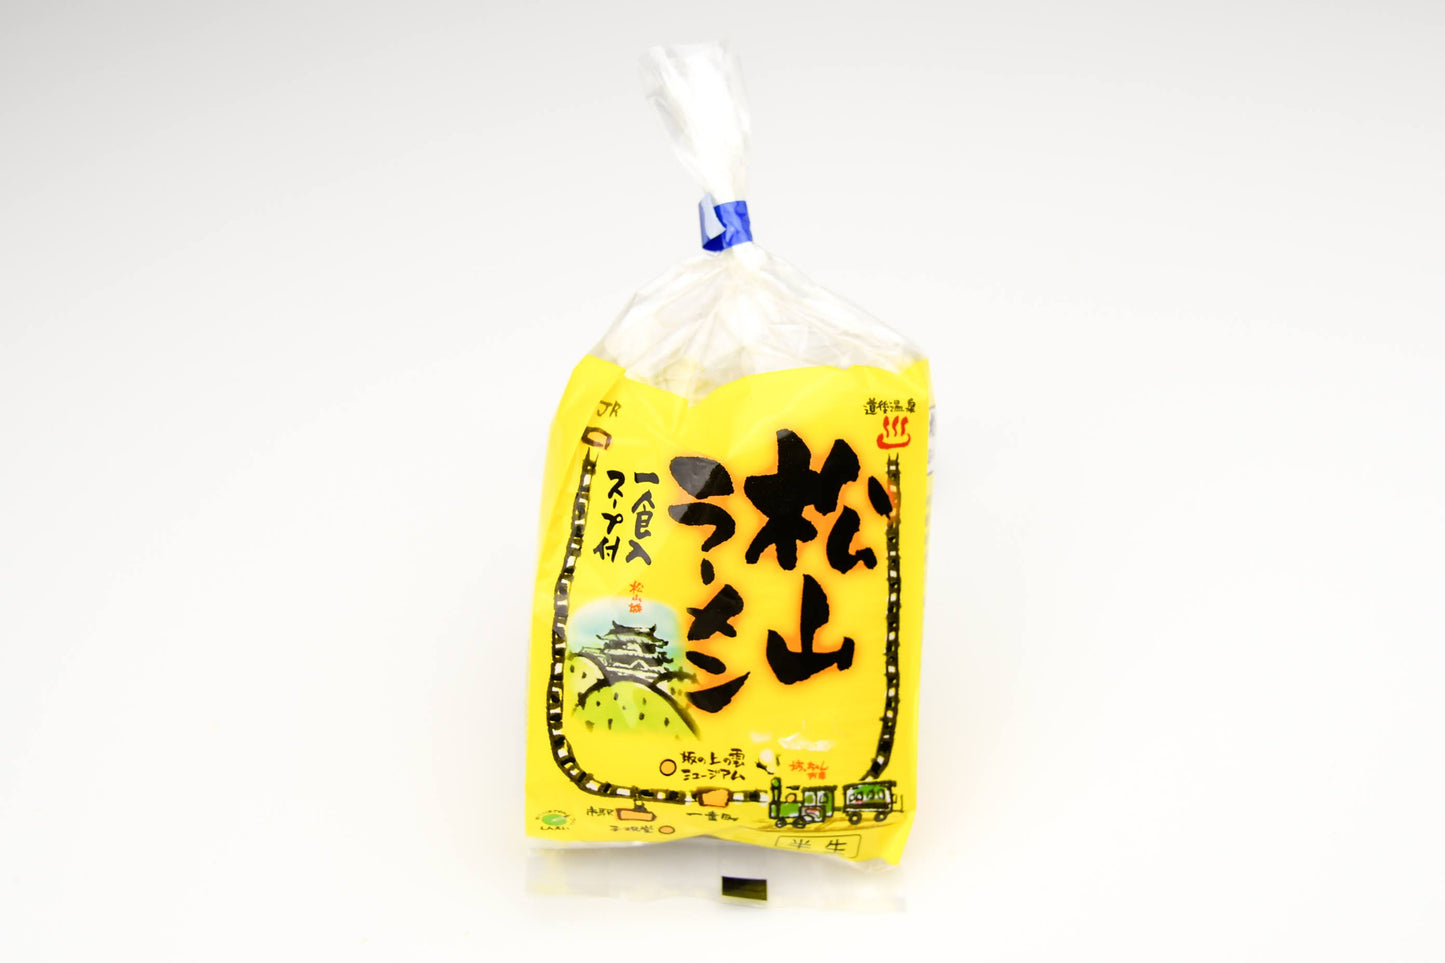 Matsuyama Ramen (20 meal boxes)